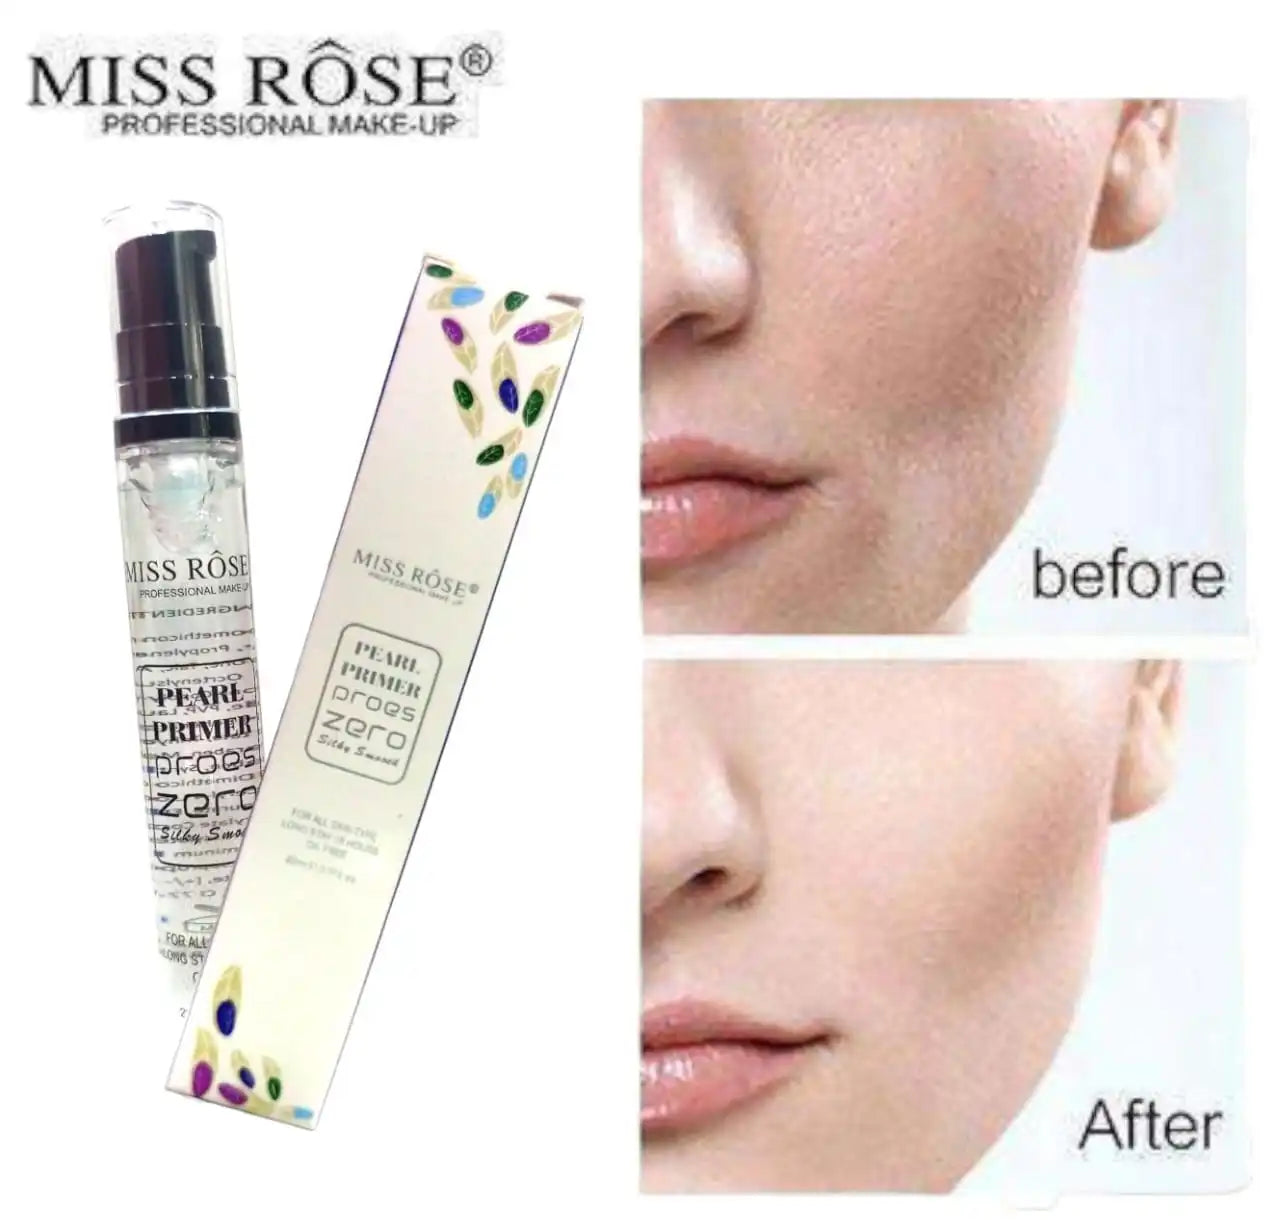 Miss Rose Smooth Foundation – Miss Rose Com Pk